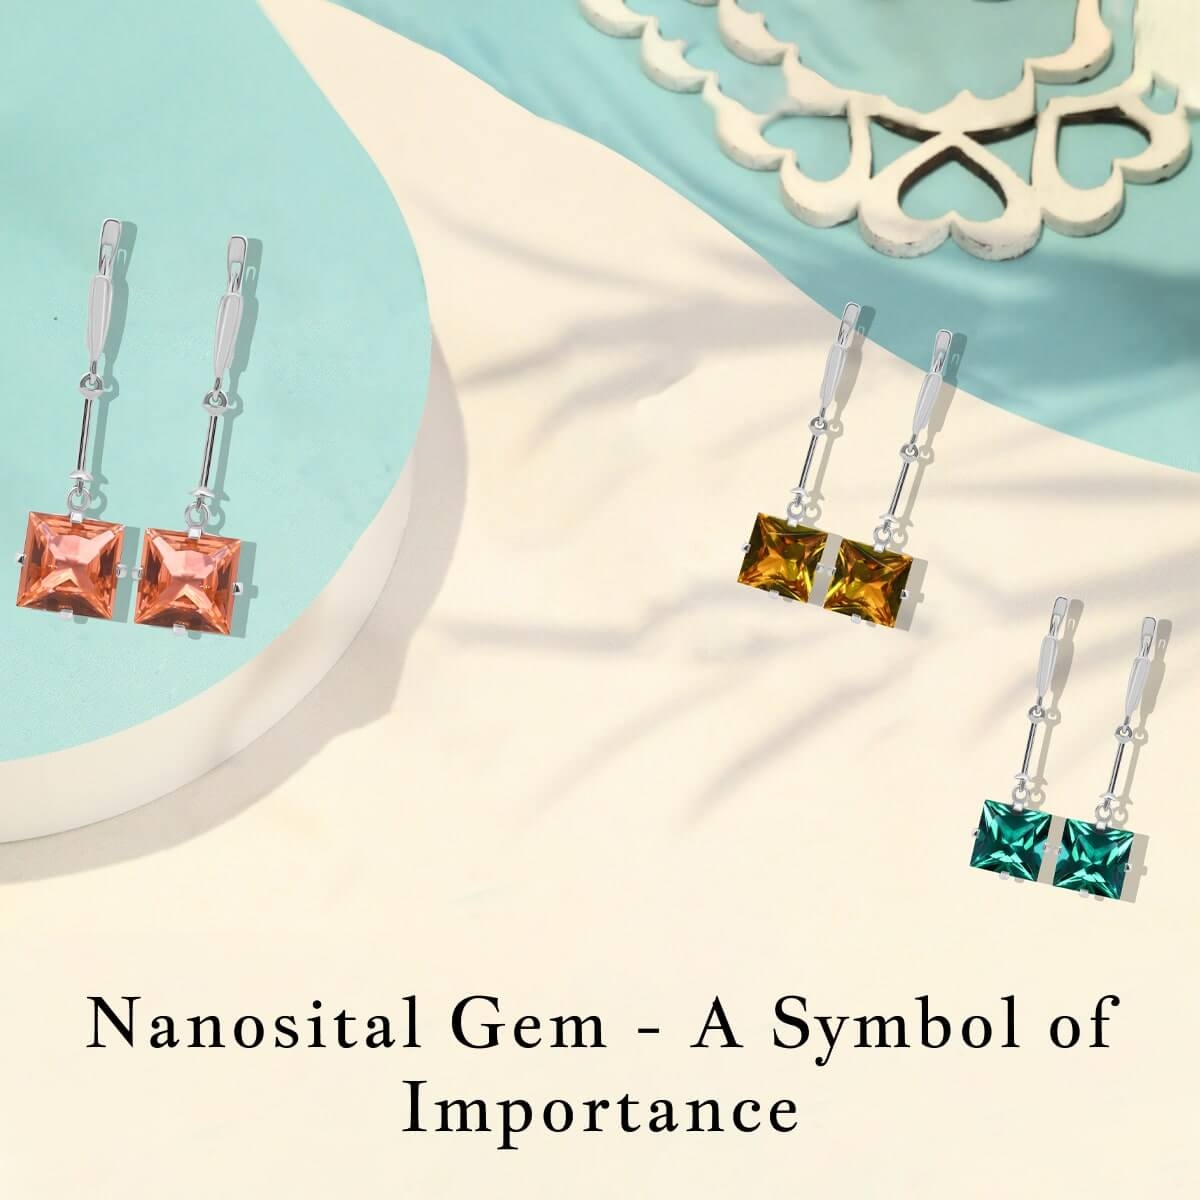 Significance of Nanosital Gem